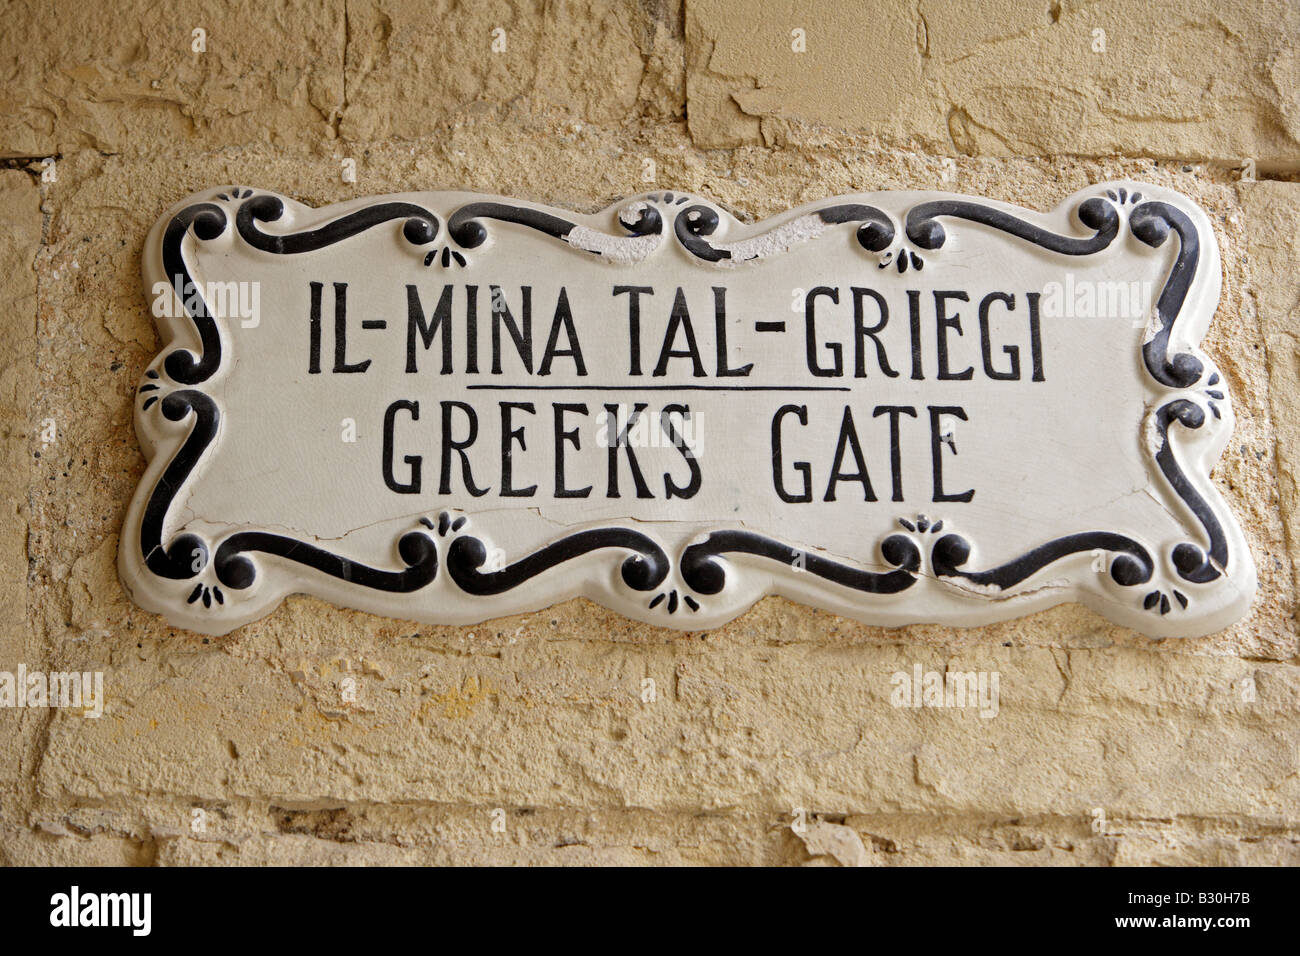 Griechen Tor Keramik Schilder, Mdina, Malta Stockfoto